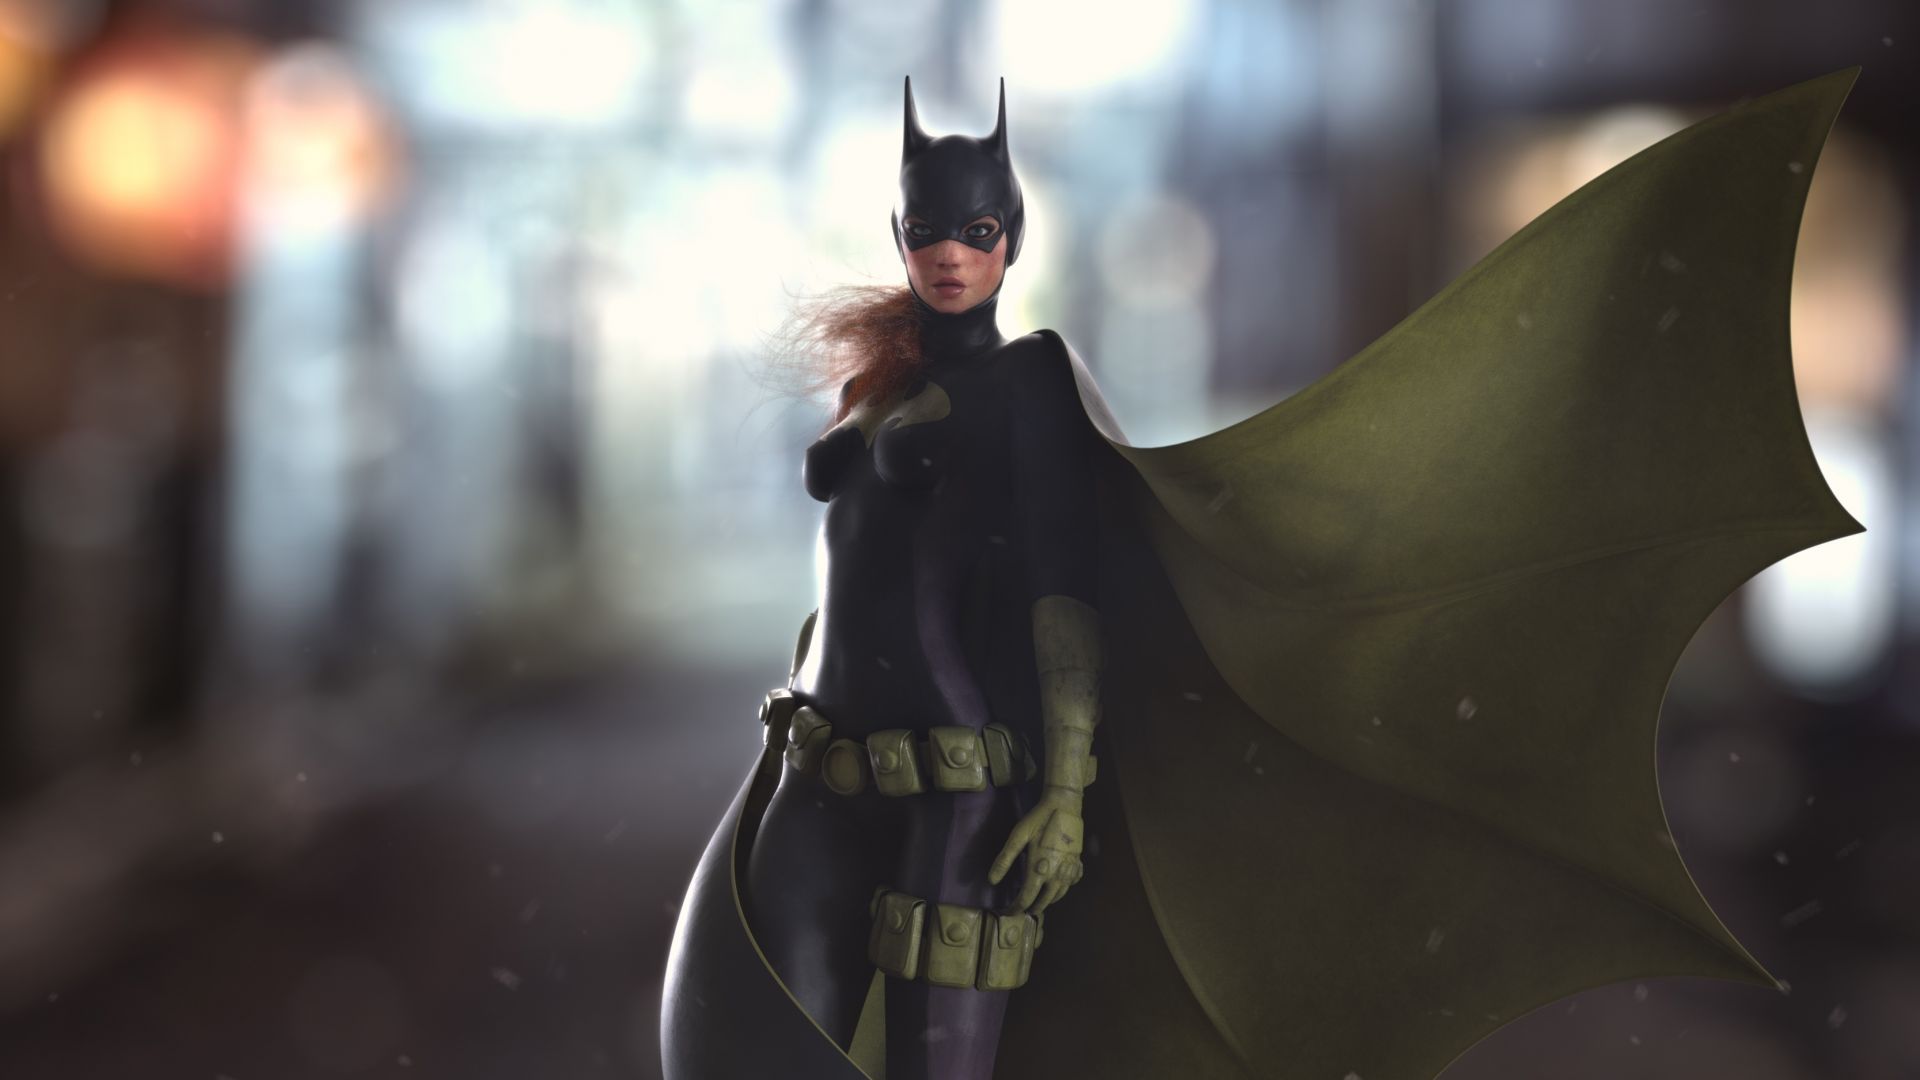 Batgirl, batwoman, superhero, artwork, 2019 wallpaper, HD image, picture, background, 224c4a